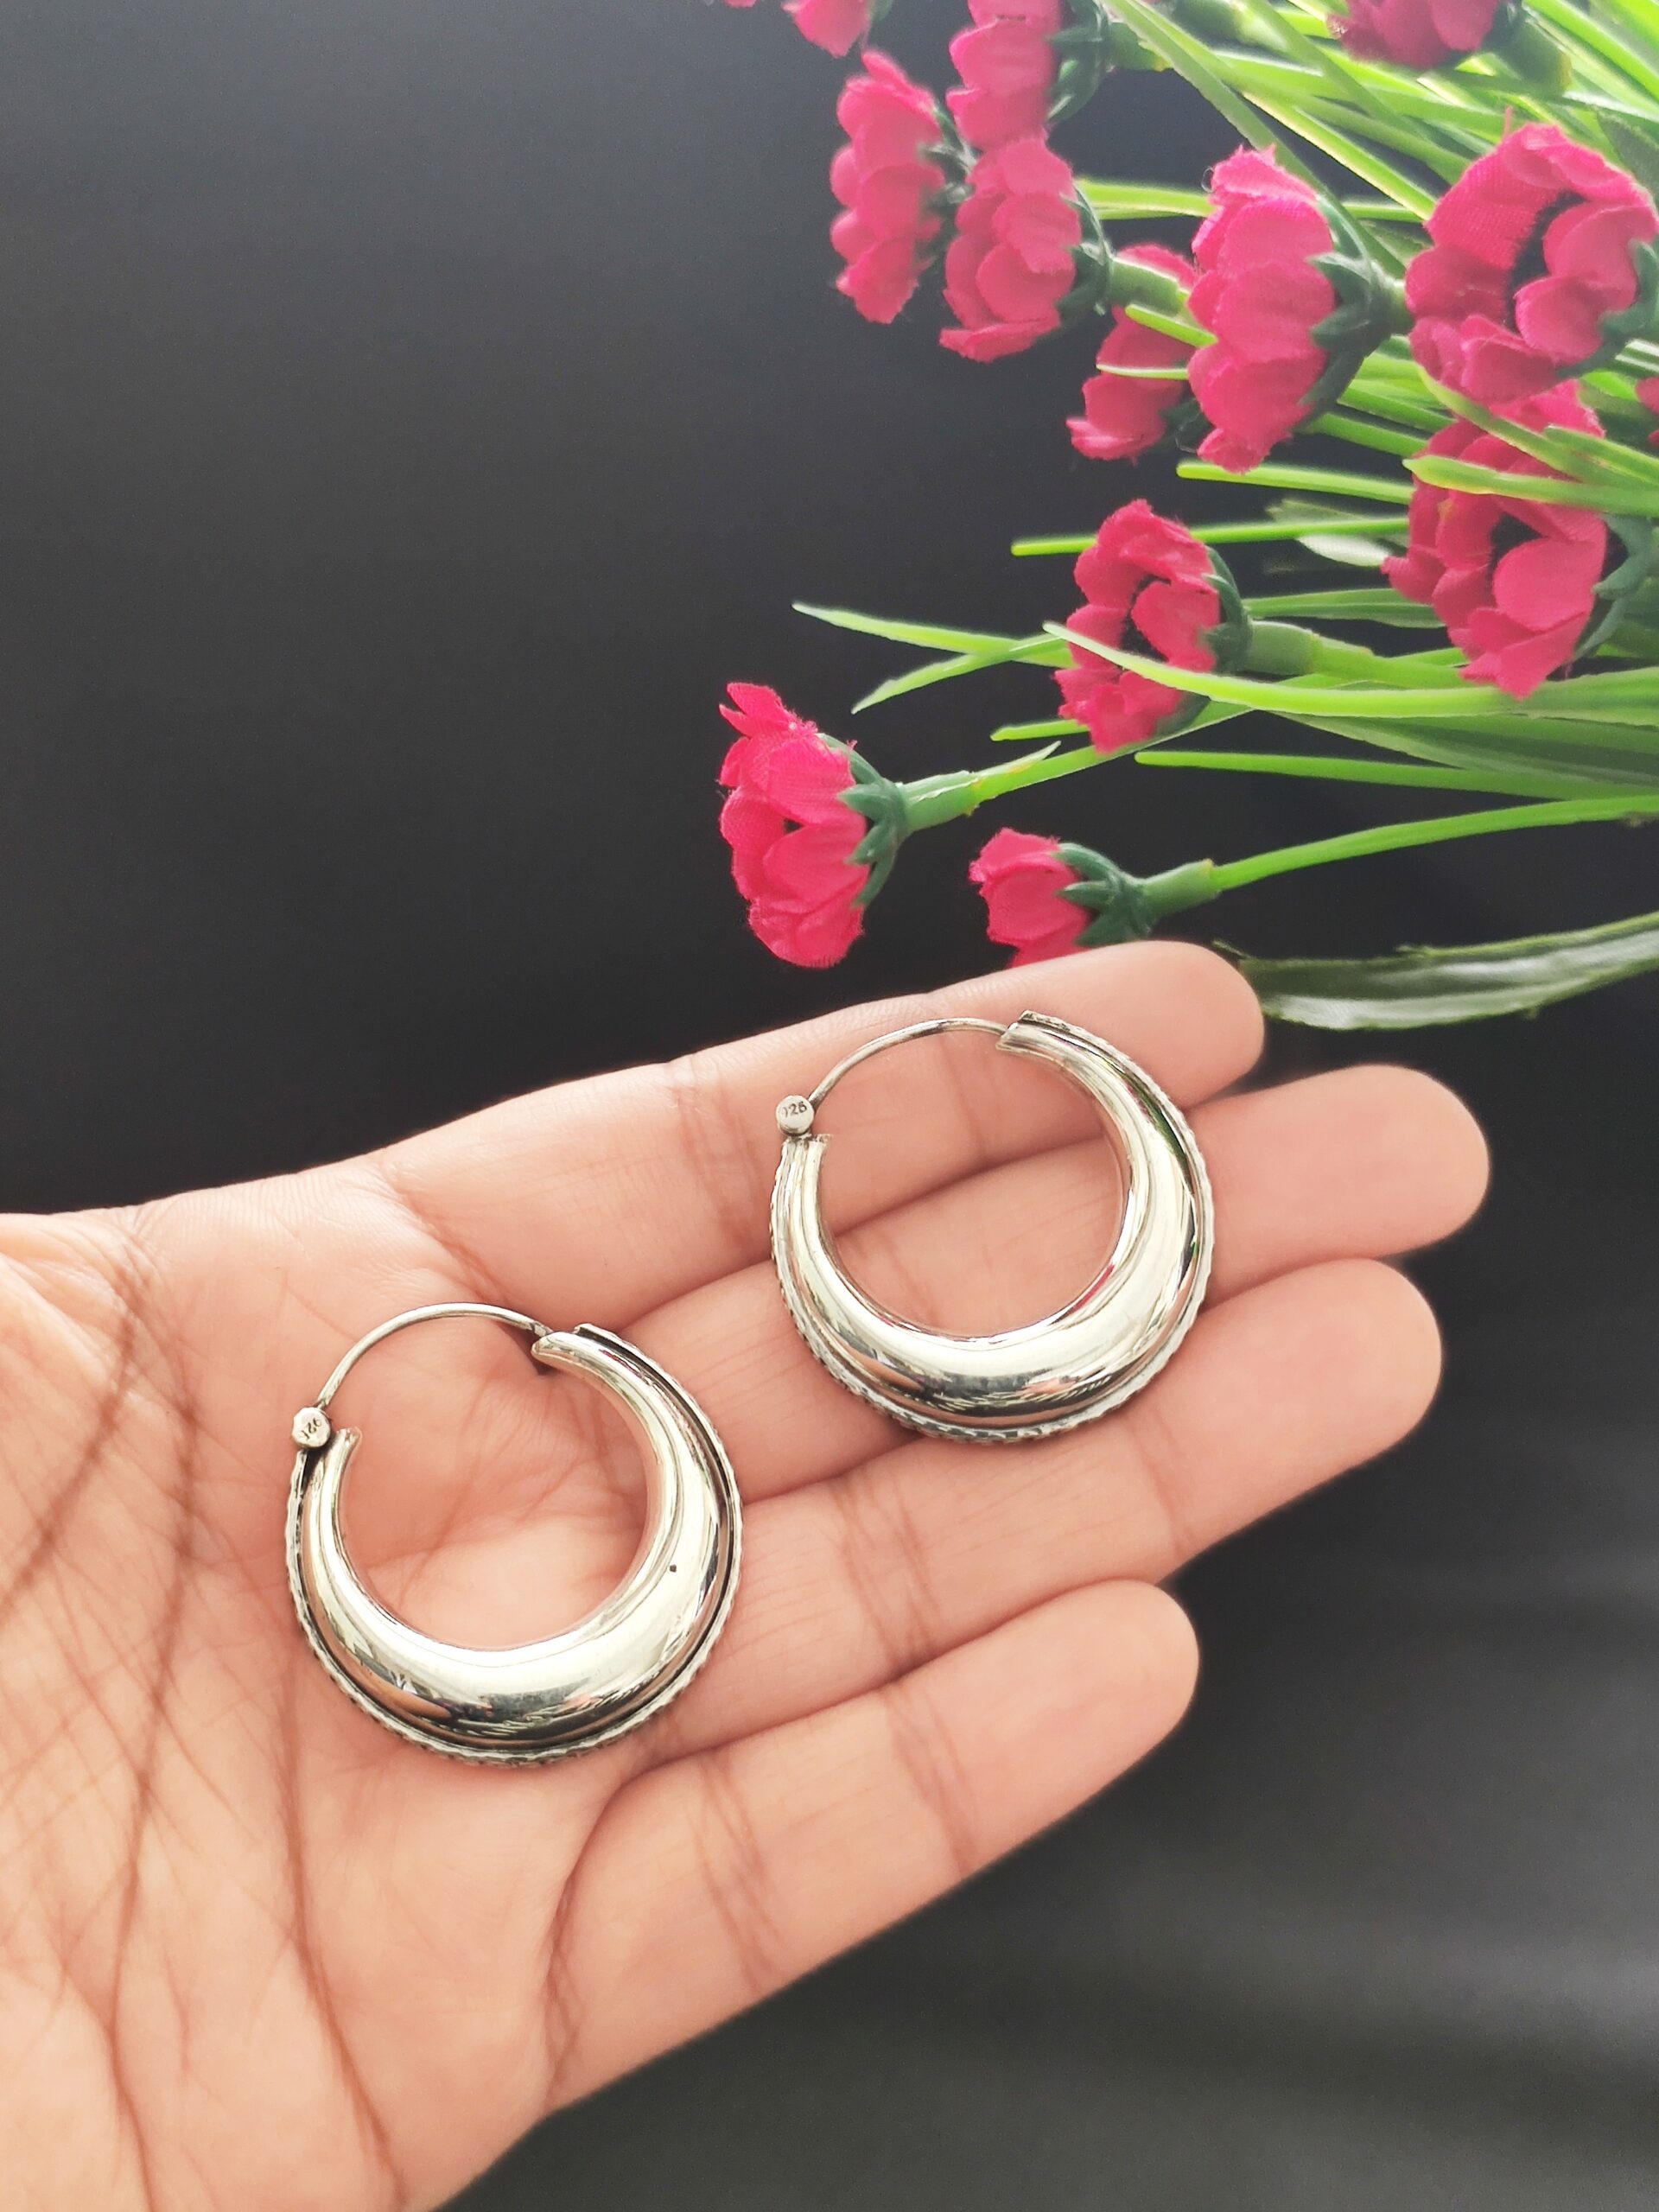 Women Rings - Buy Women Rings Online Starting at Just ₹32 | Meesho